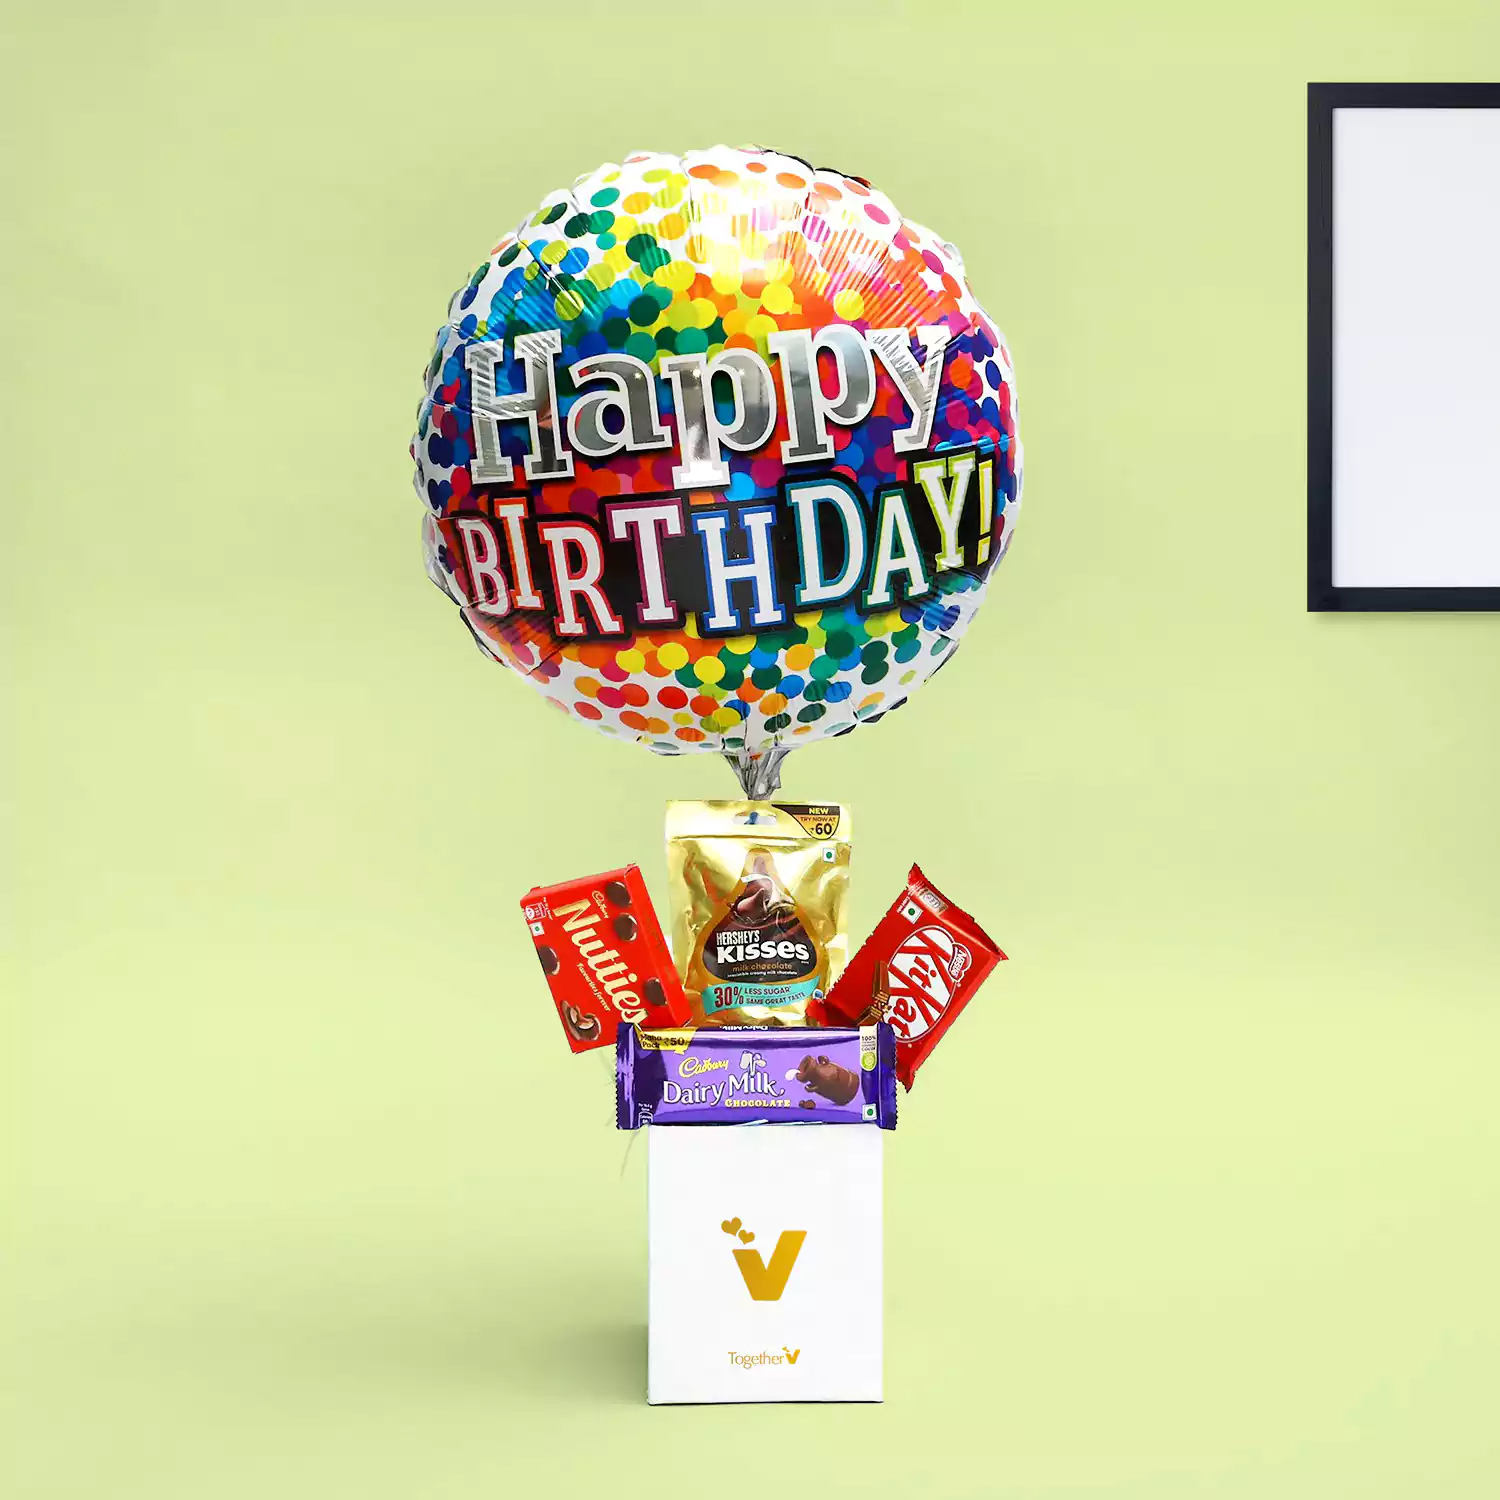 hubby-birthday-surprise-ideas-shop-clearance-save-60-jlcatj-gob-mx